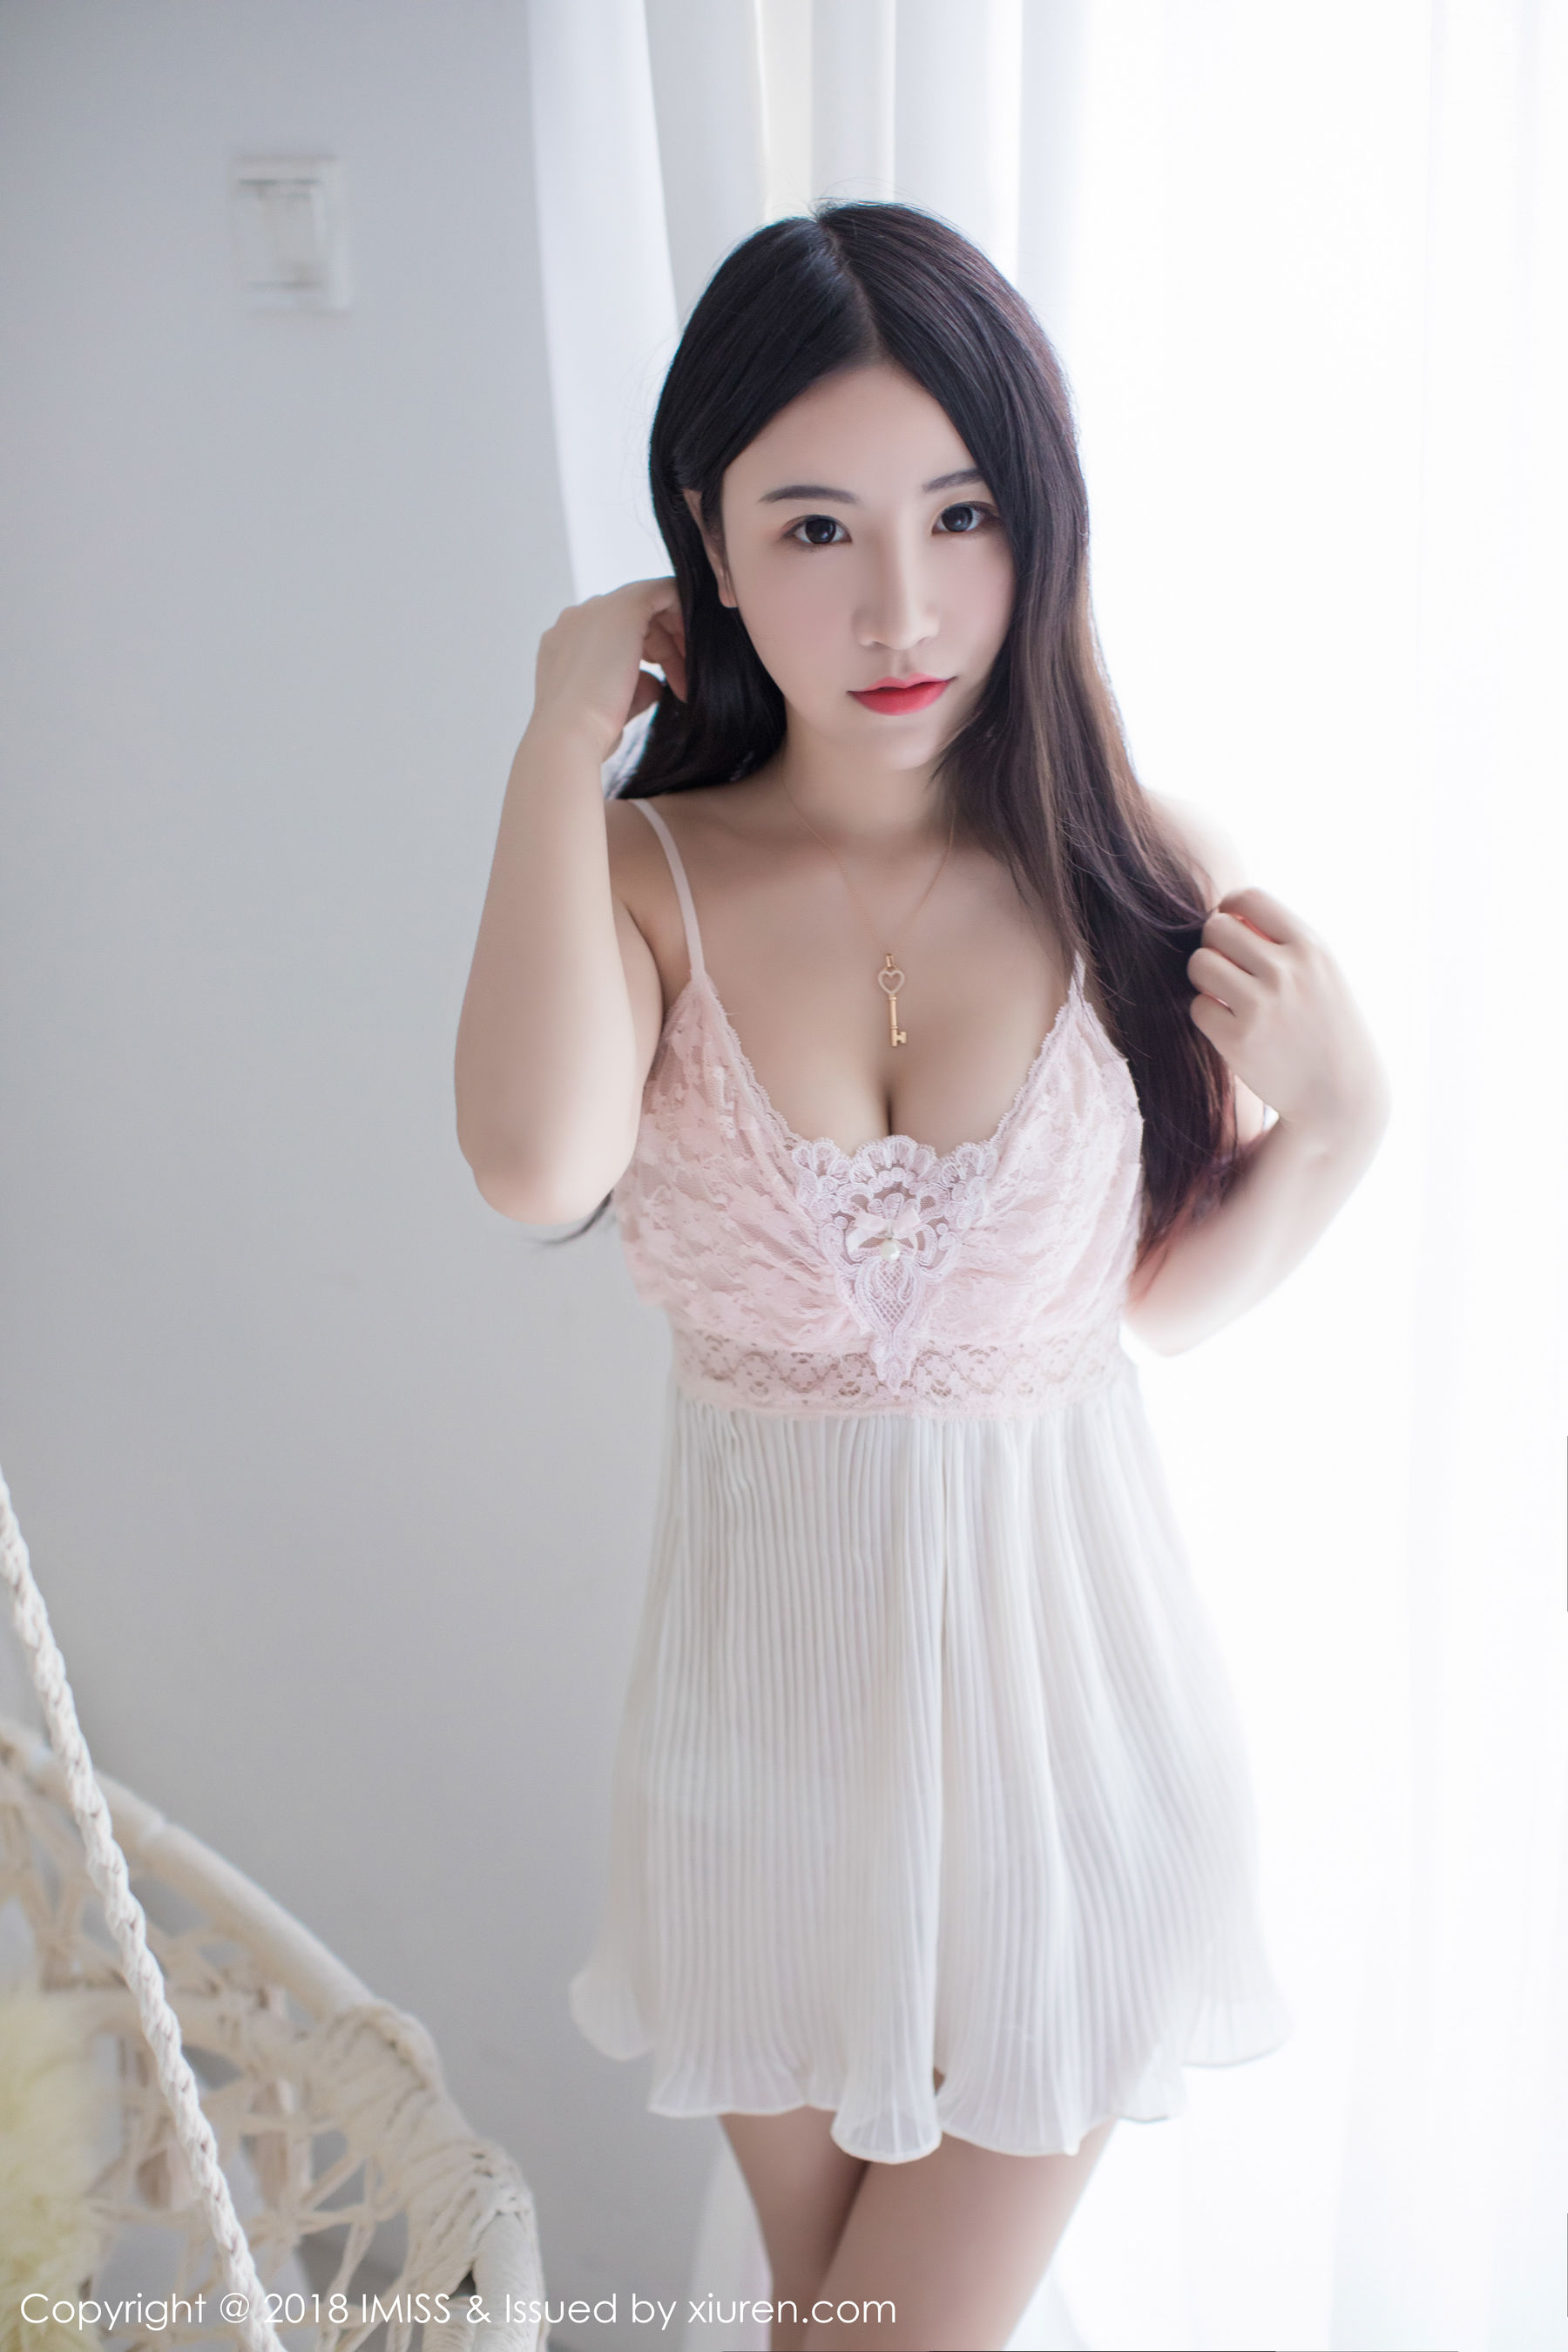 Xie Zhixin Sindy “Home Girlfriend” (IMiss) Vol.214 Photo Album